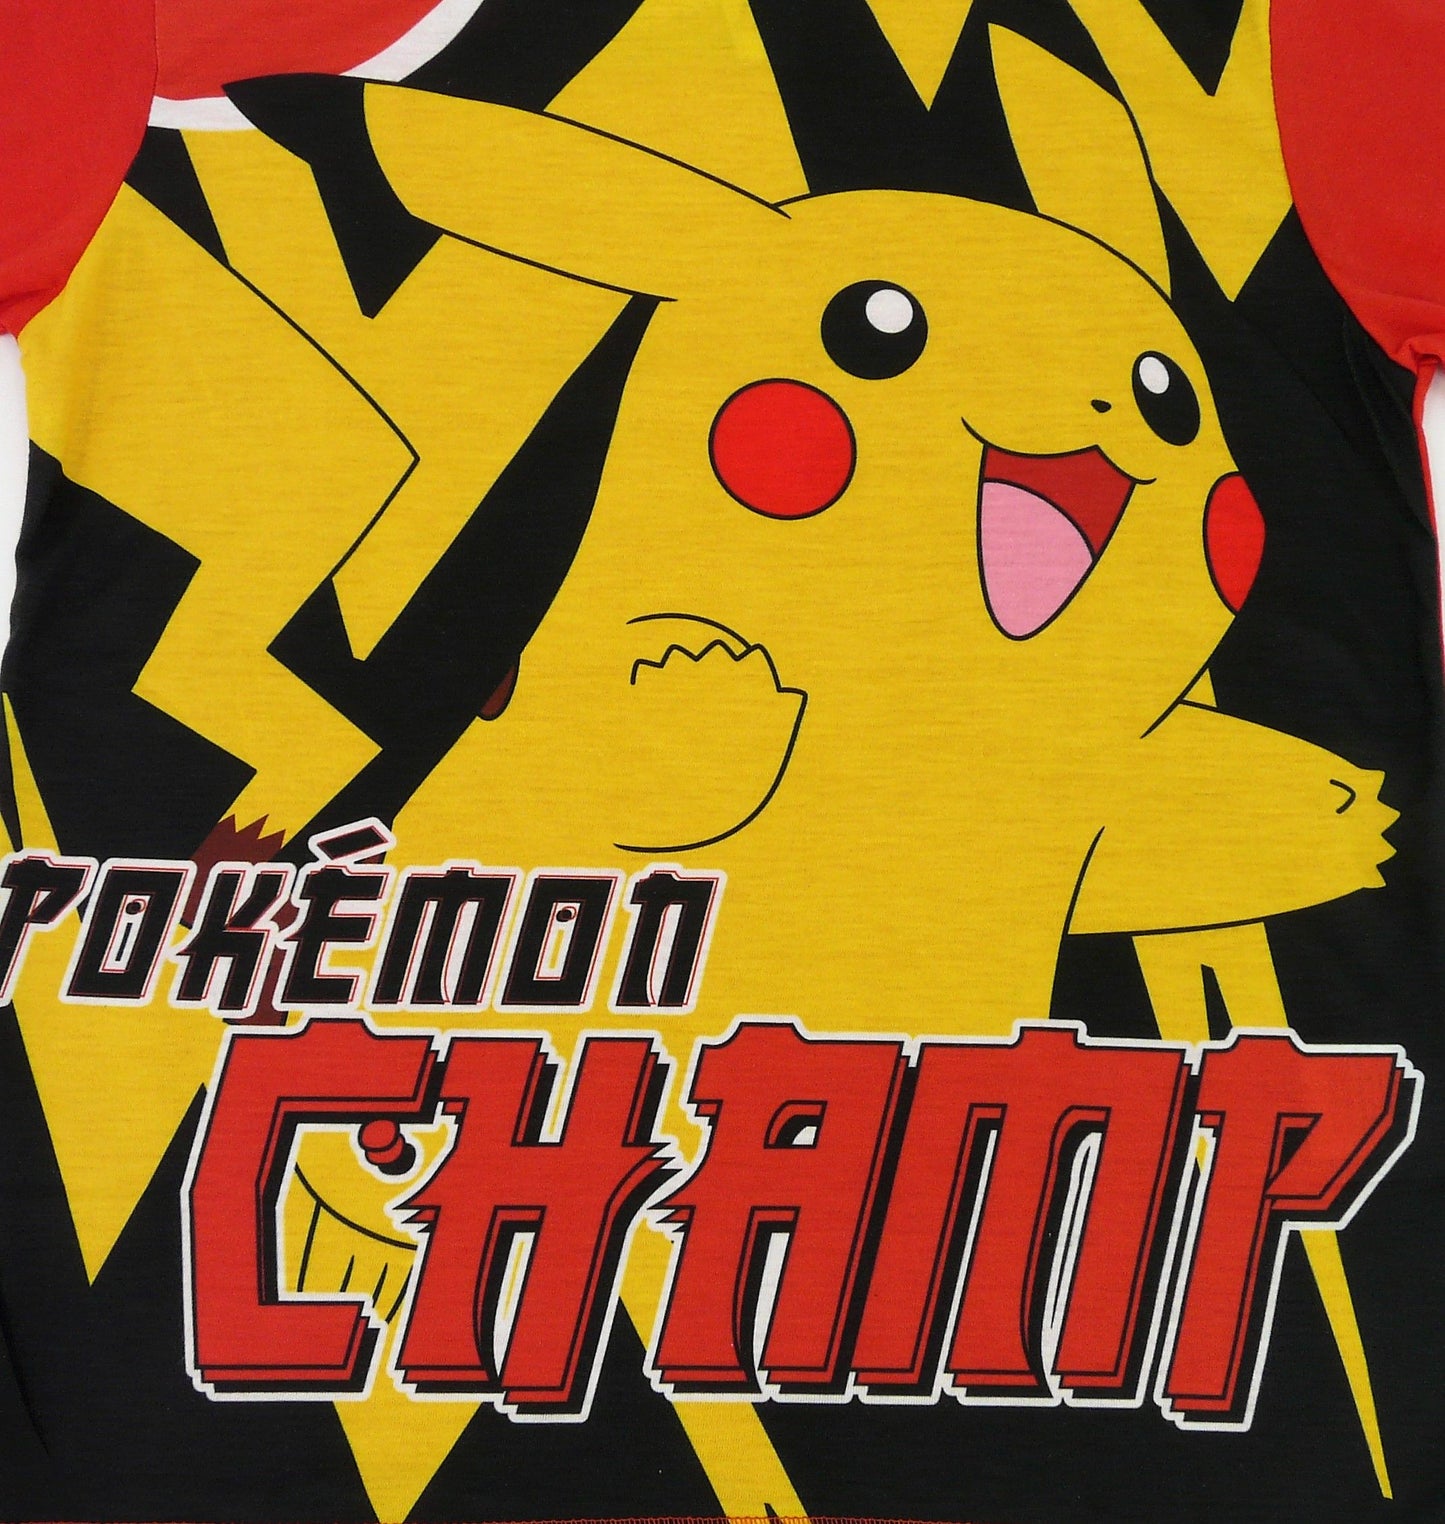 Pokemon Boys Shortie Pyjamas Set "Pikachu the Champ"